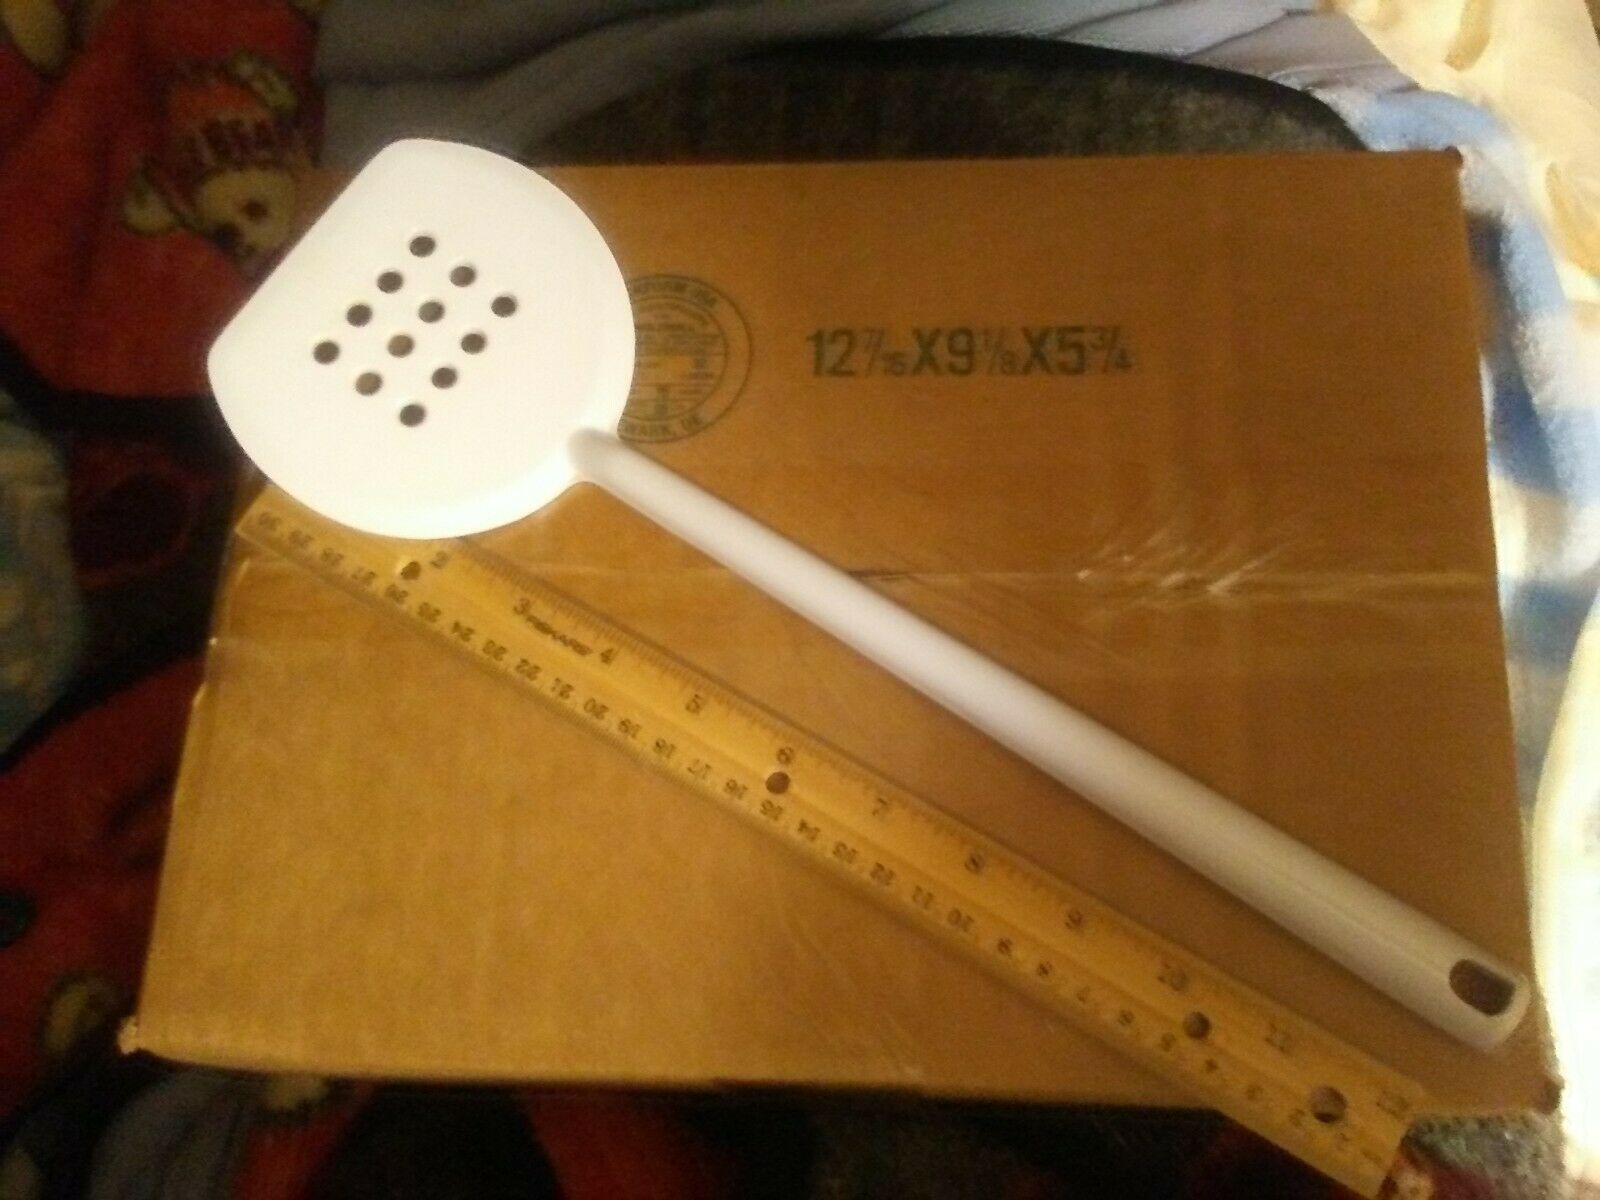 Ekco white melamine spatula D365-966 - $23.74